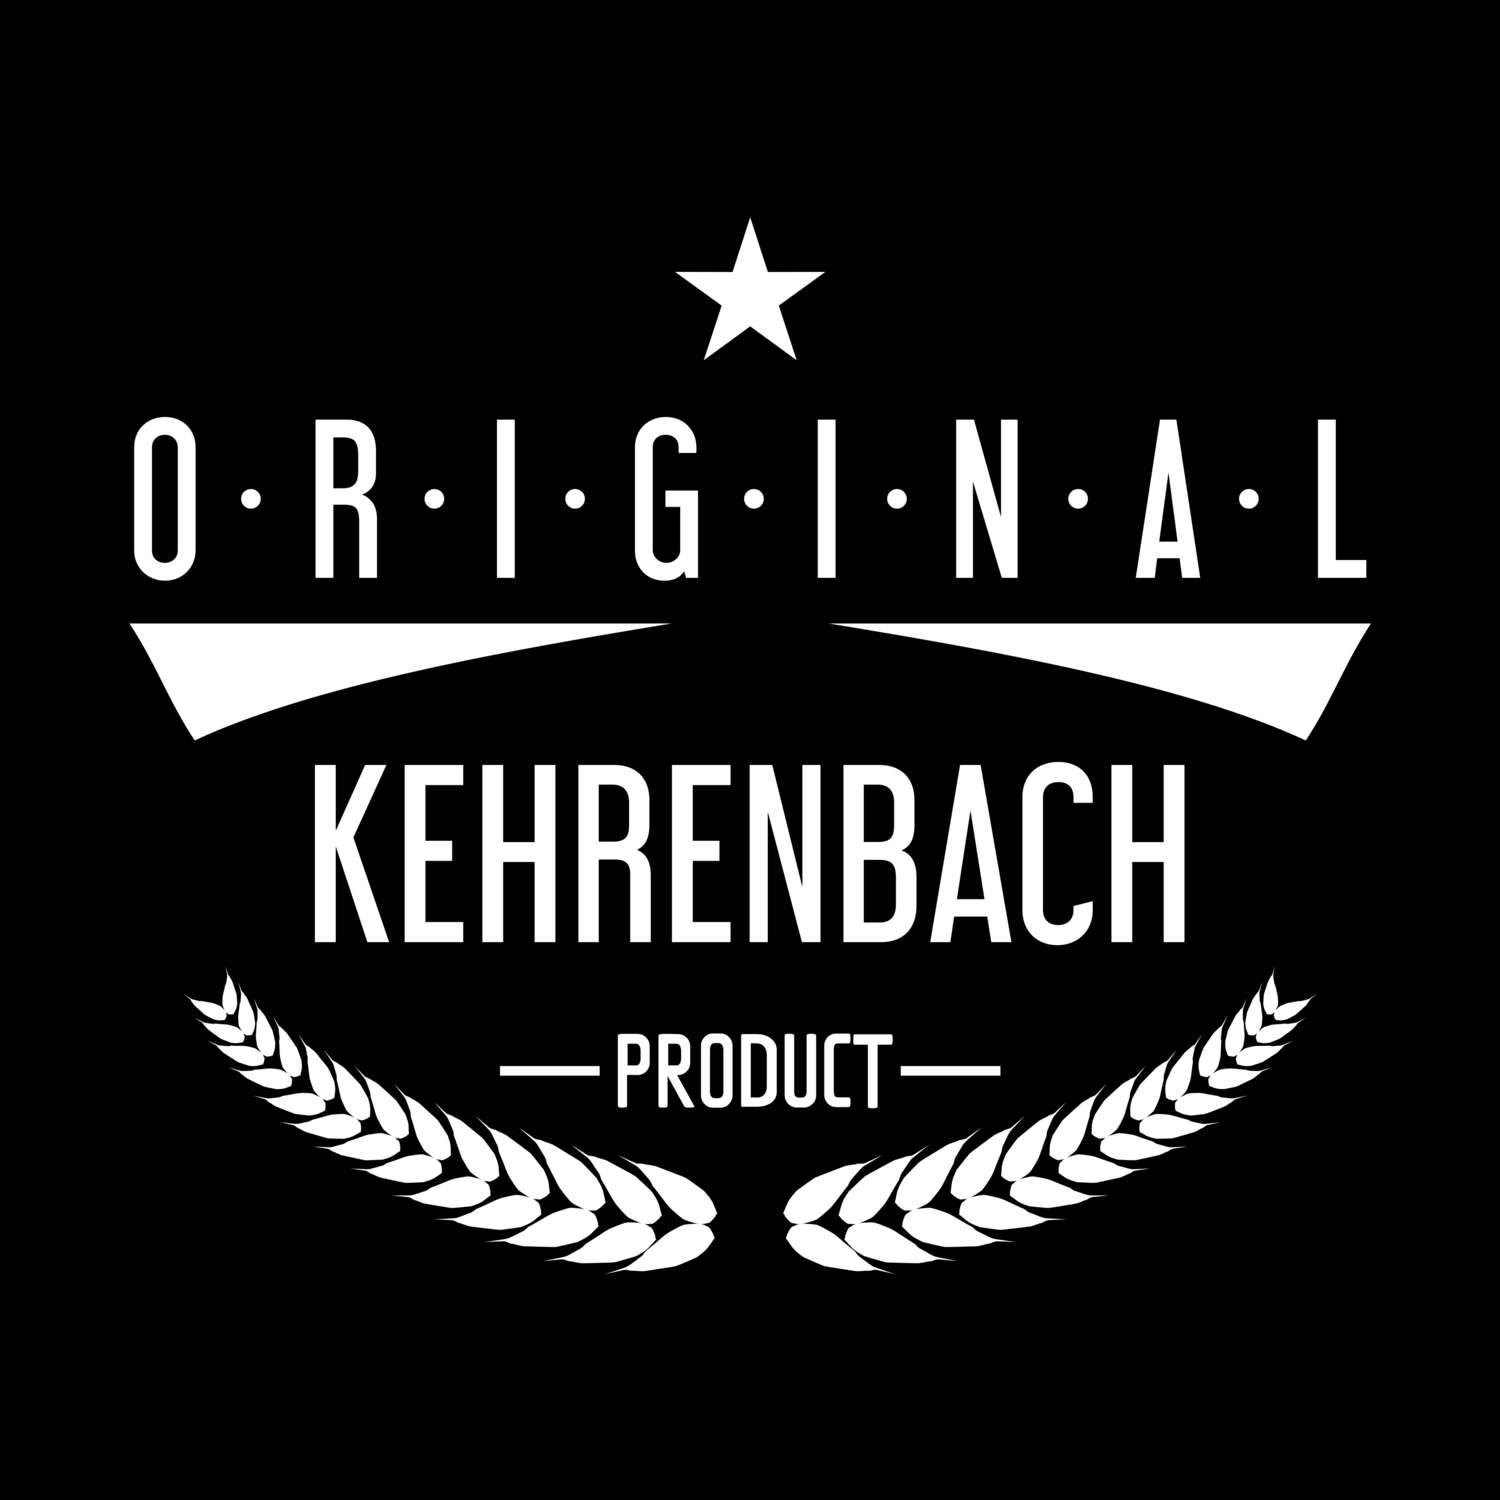 Kehrenbach T-Shirt »Original Product«